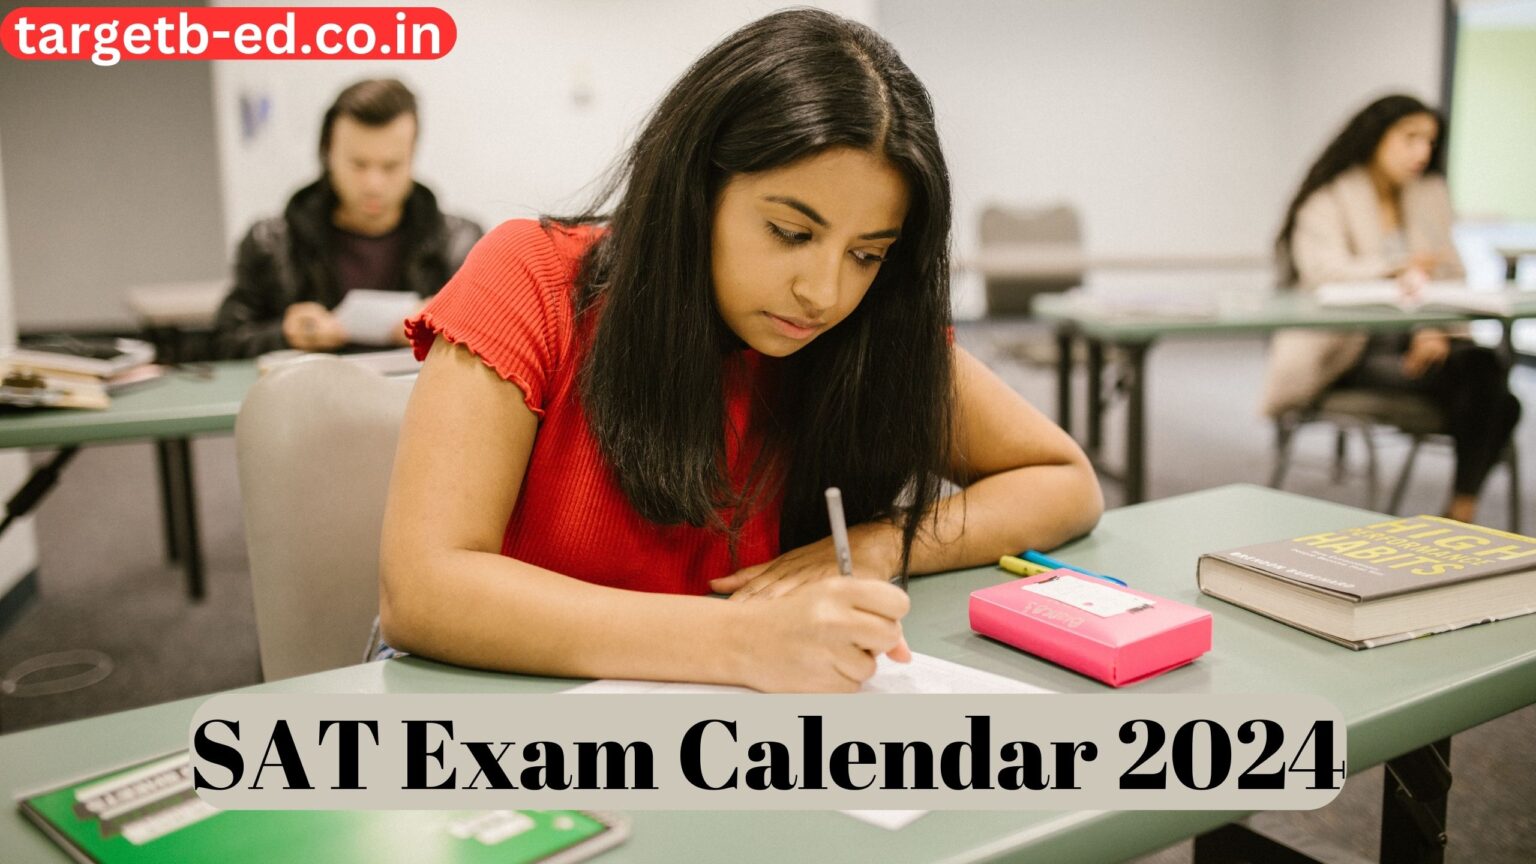 SAT Exam Calendar 2024 Verifying SAT Dates and Registration Deadlines